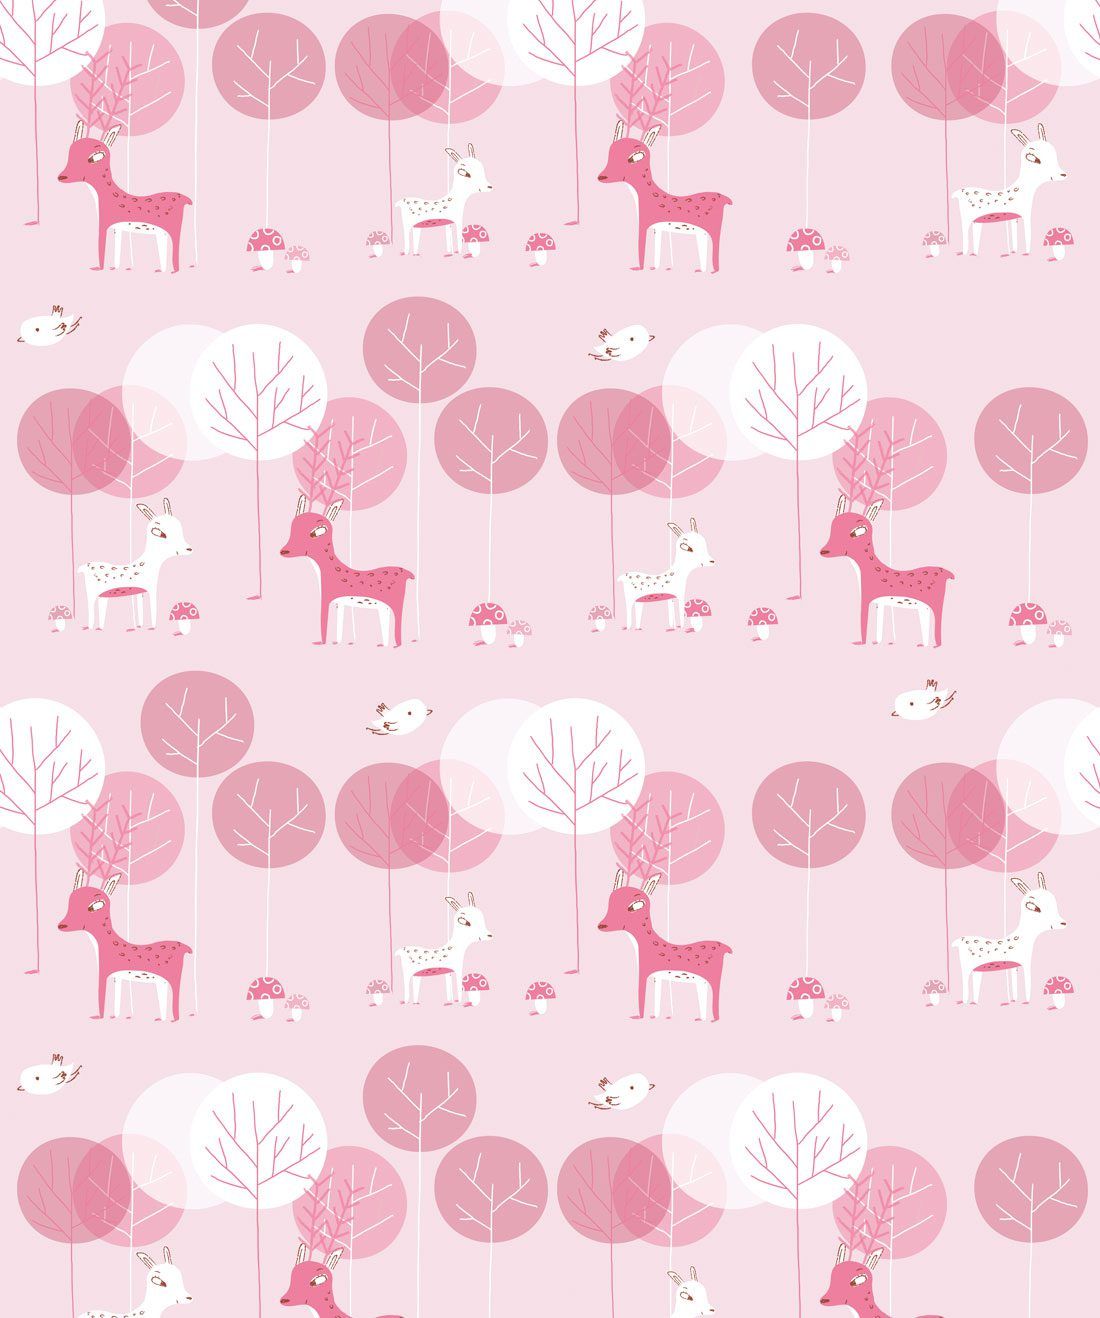 I Heart Deers is a Playful Pink Wallpaper